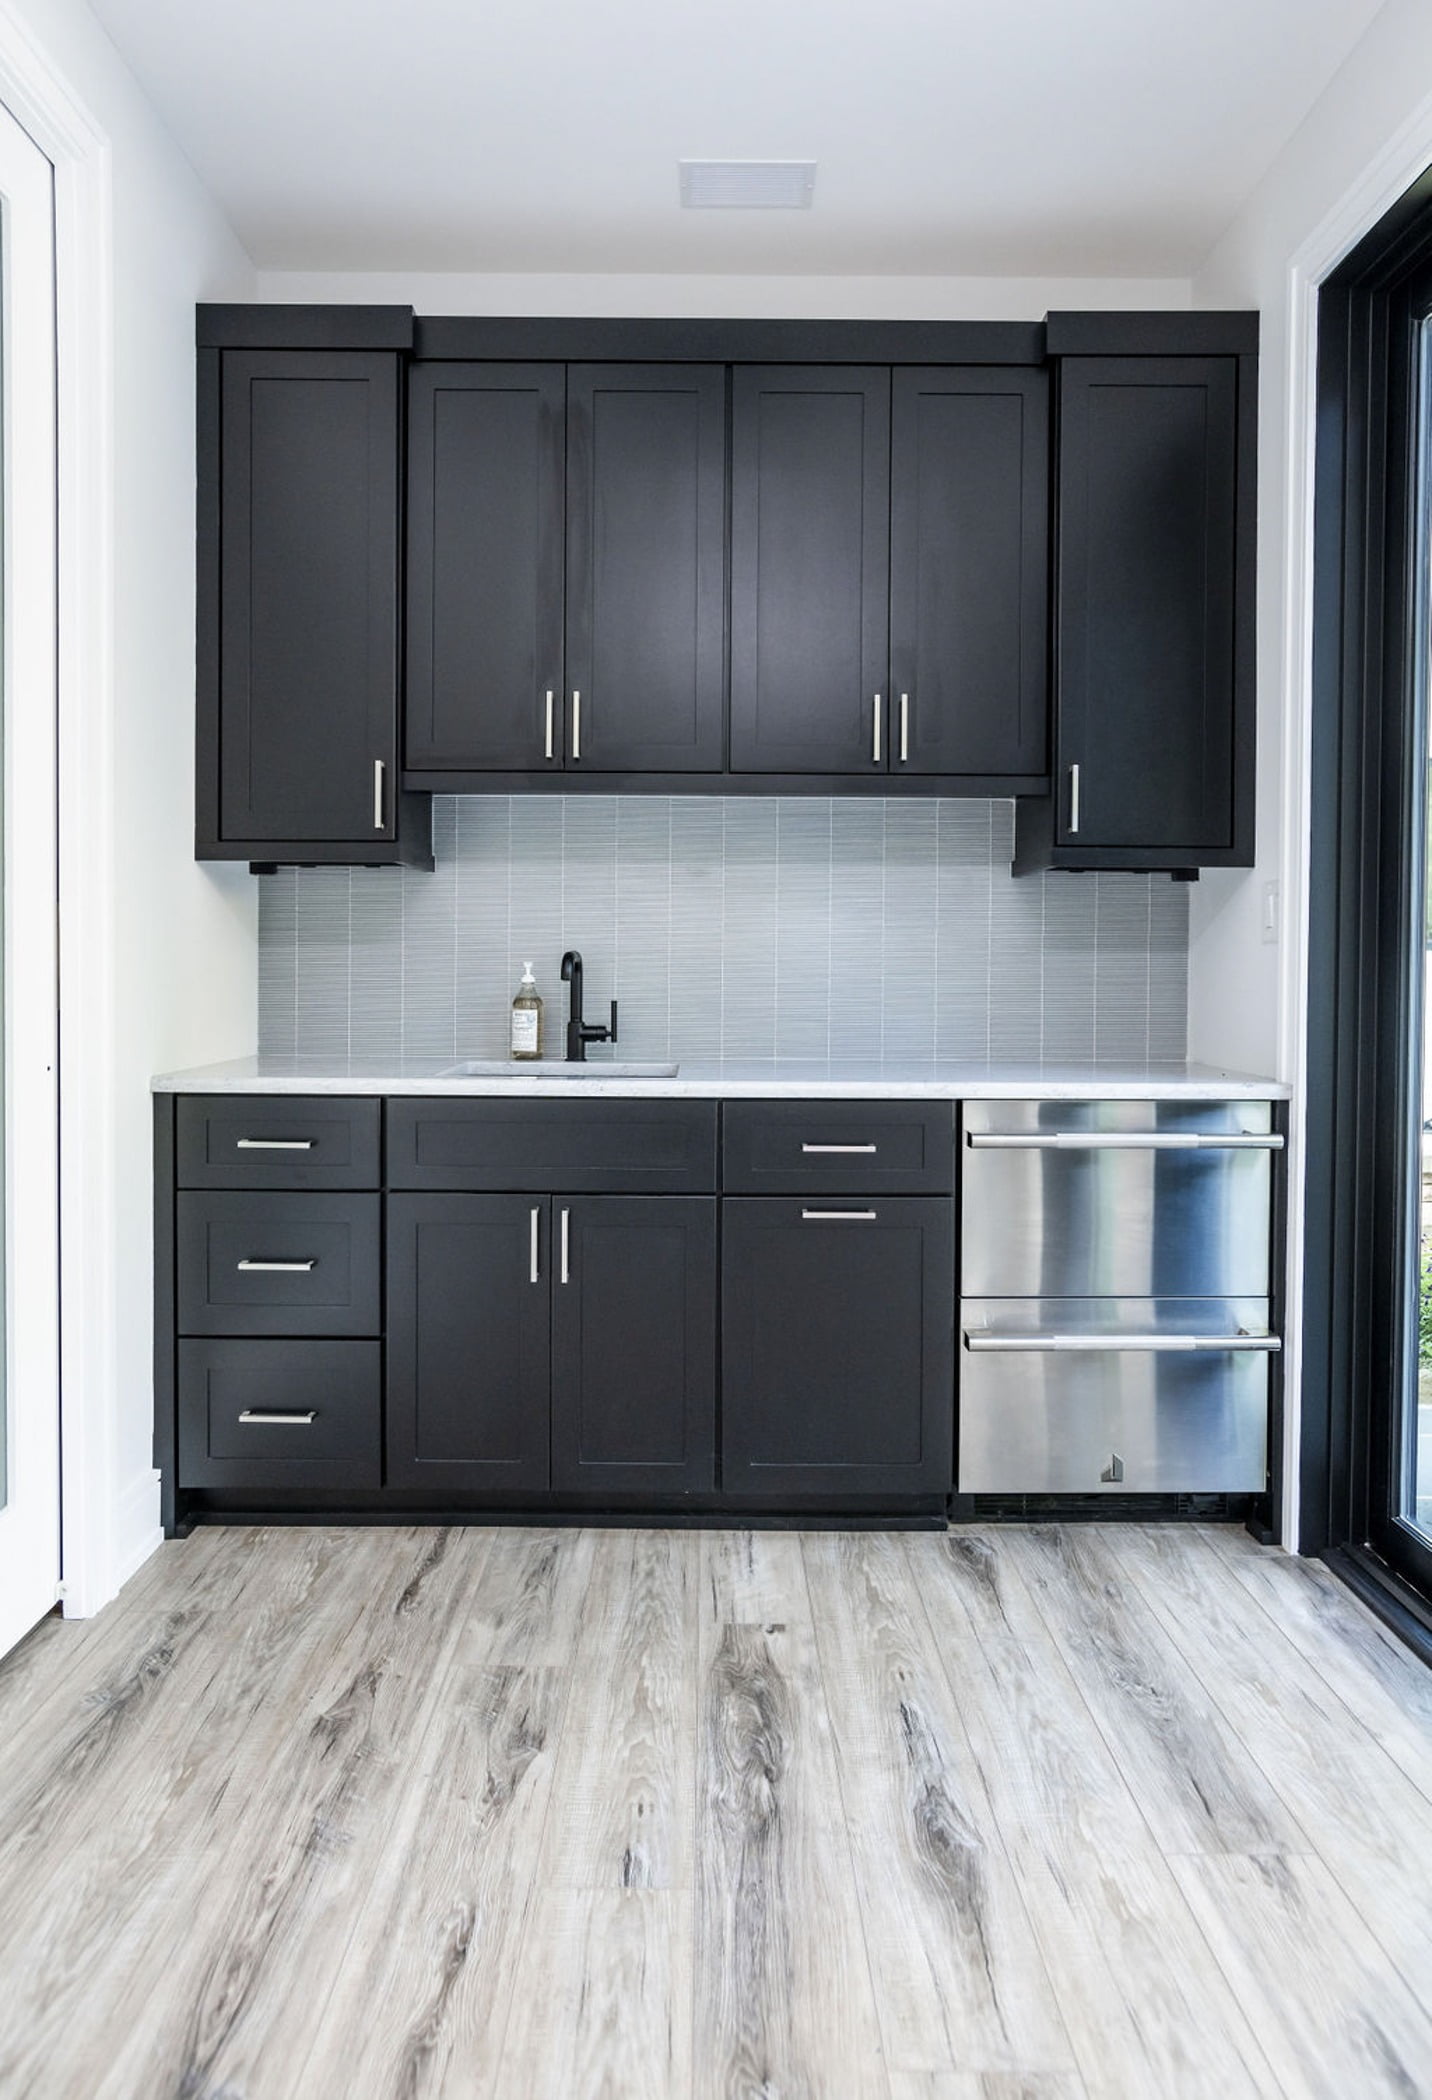 Transitional/Modern kitchenette with dark wood cabinetry, light grey tile backsplash, and light hardwood flooring